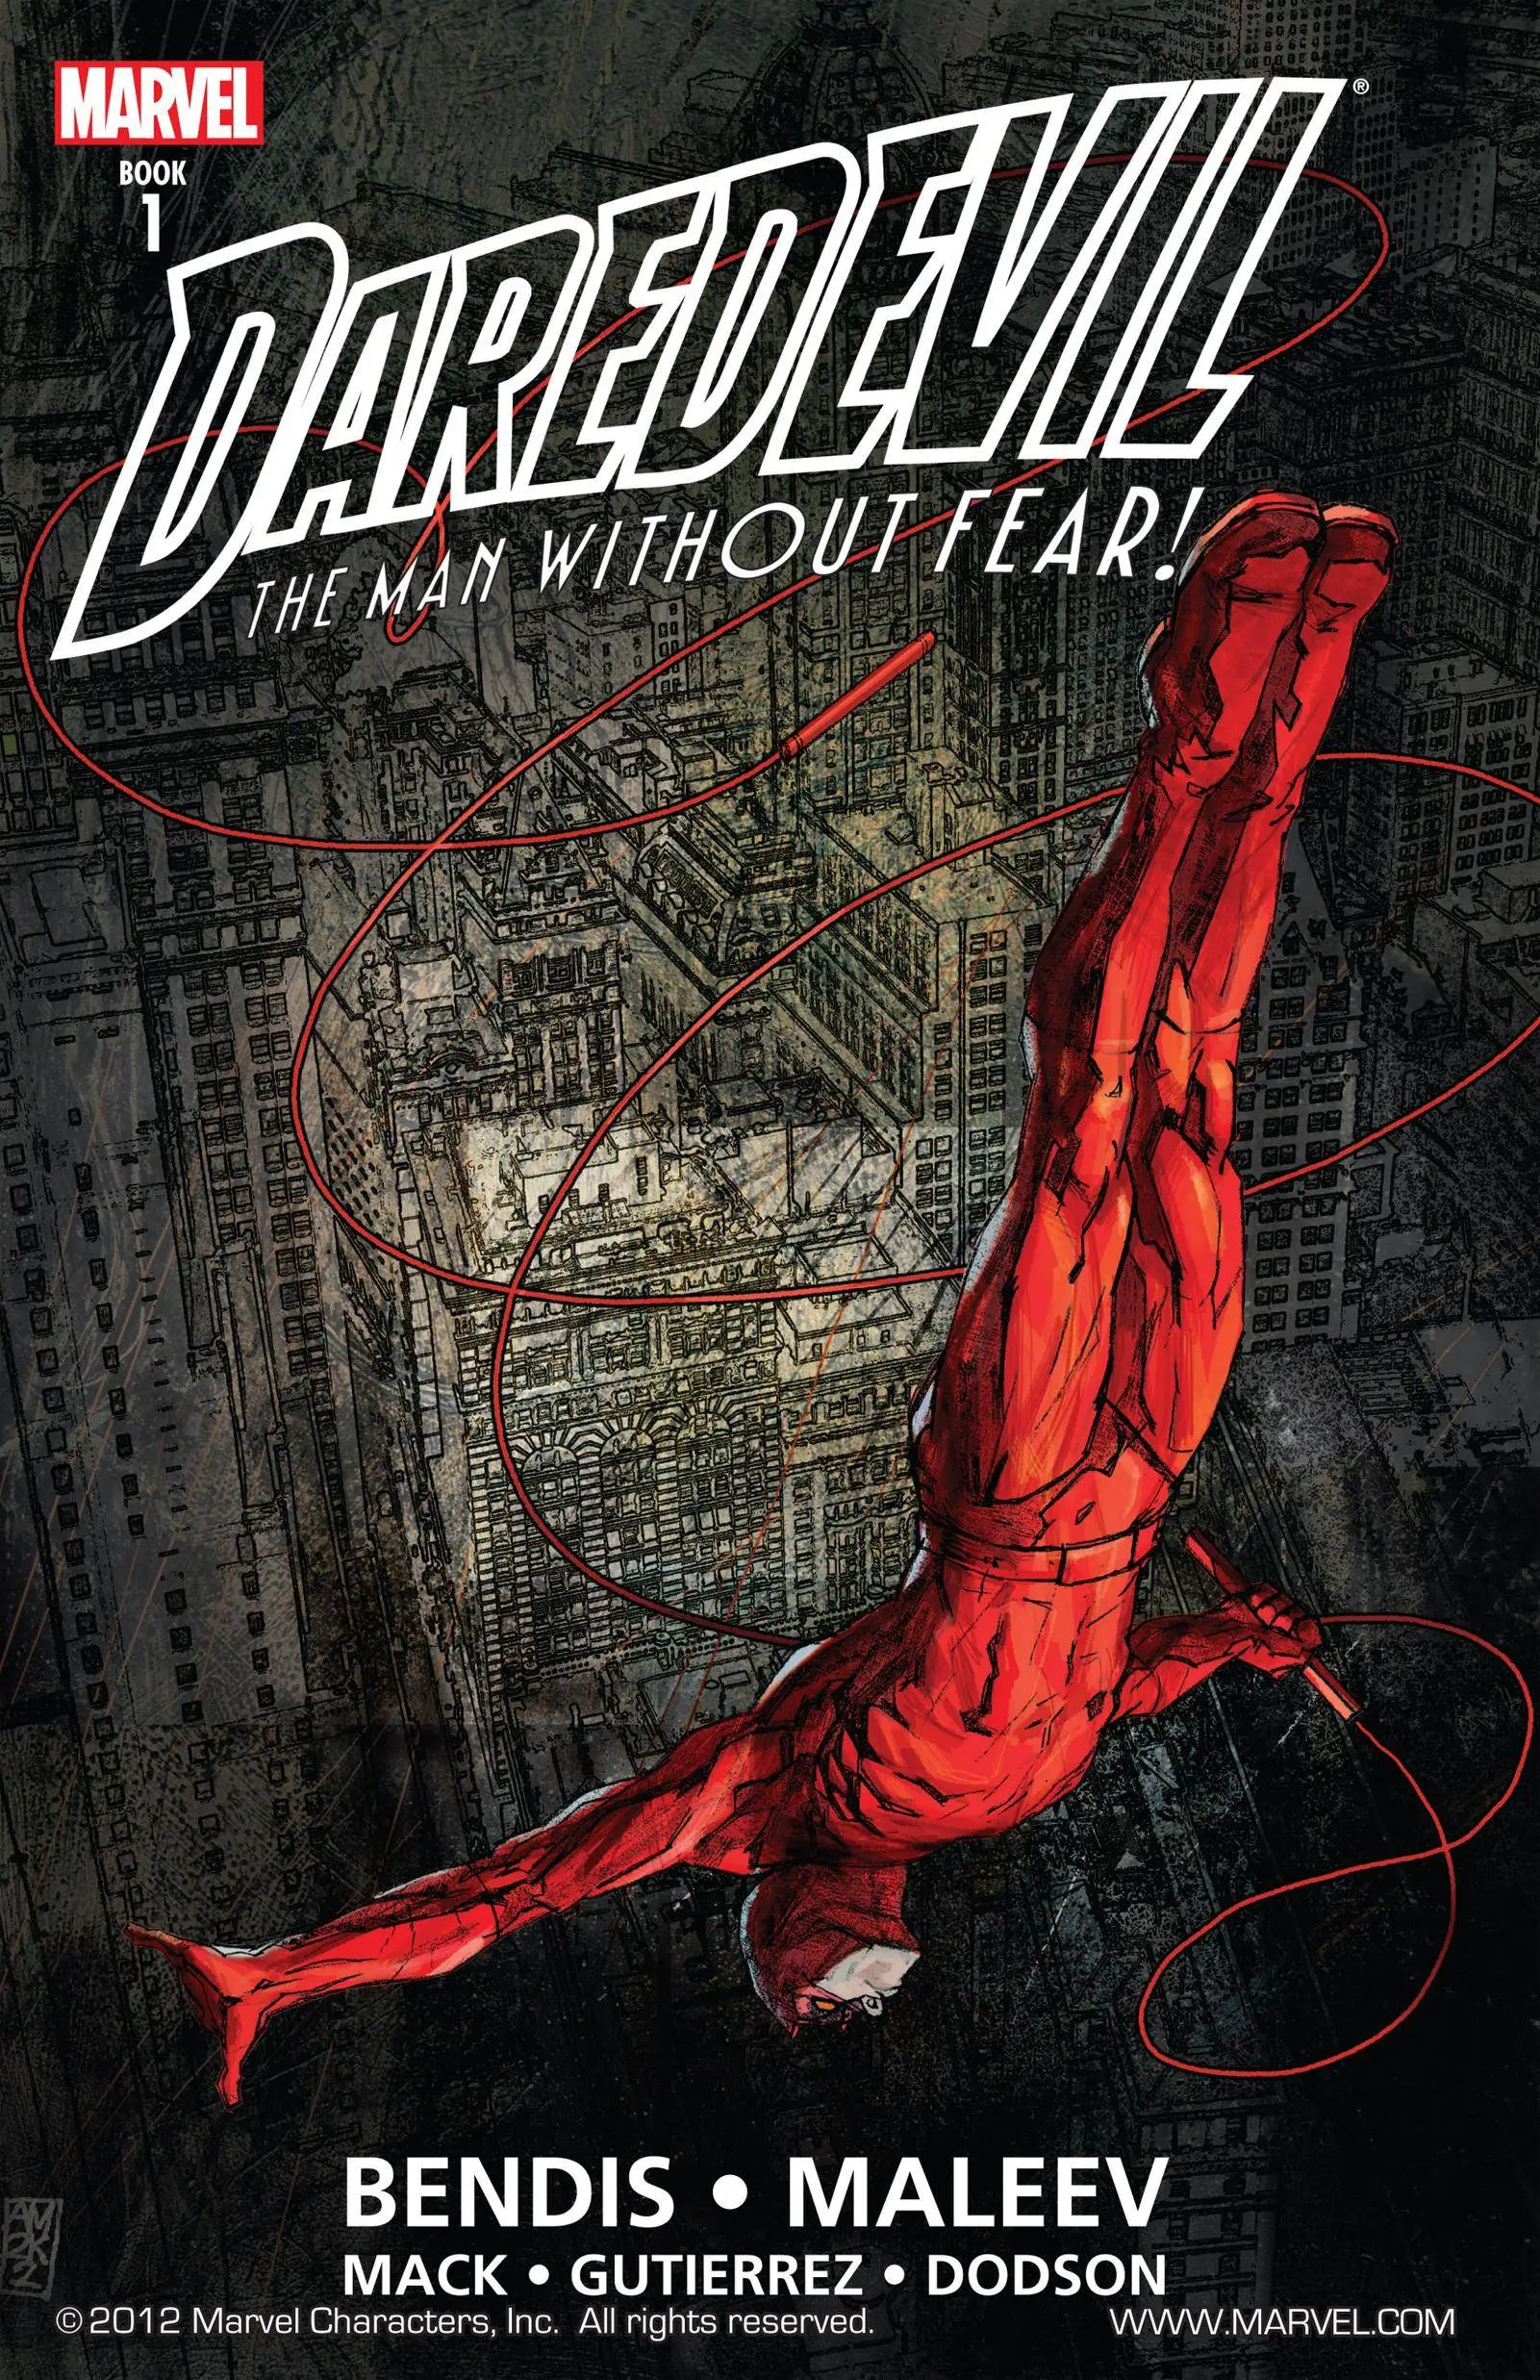 Daredevil by Brian Michael Bendis Omnibus, Vol. 1 by Brian Michael Bendis